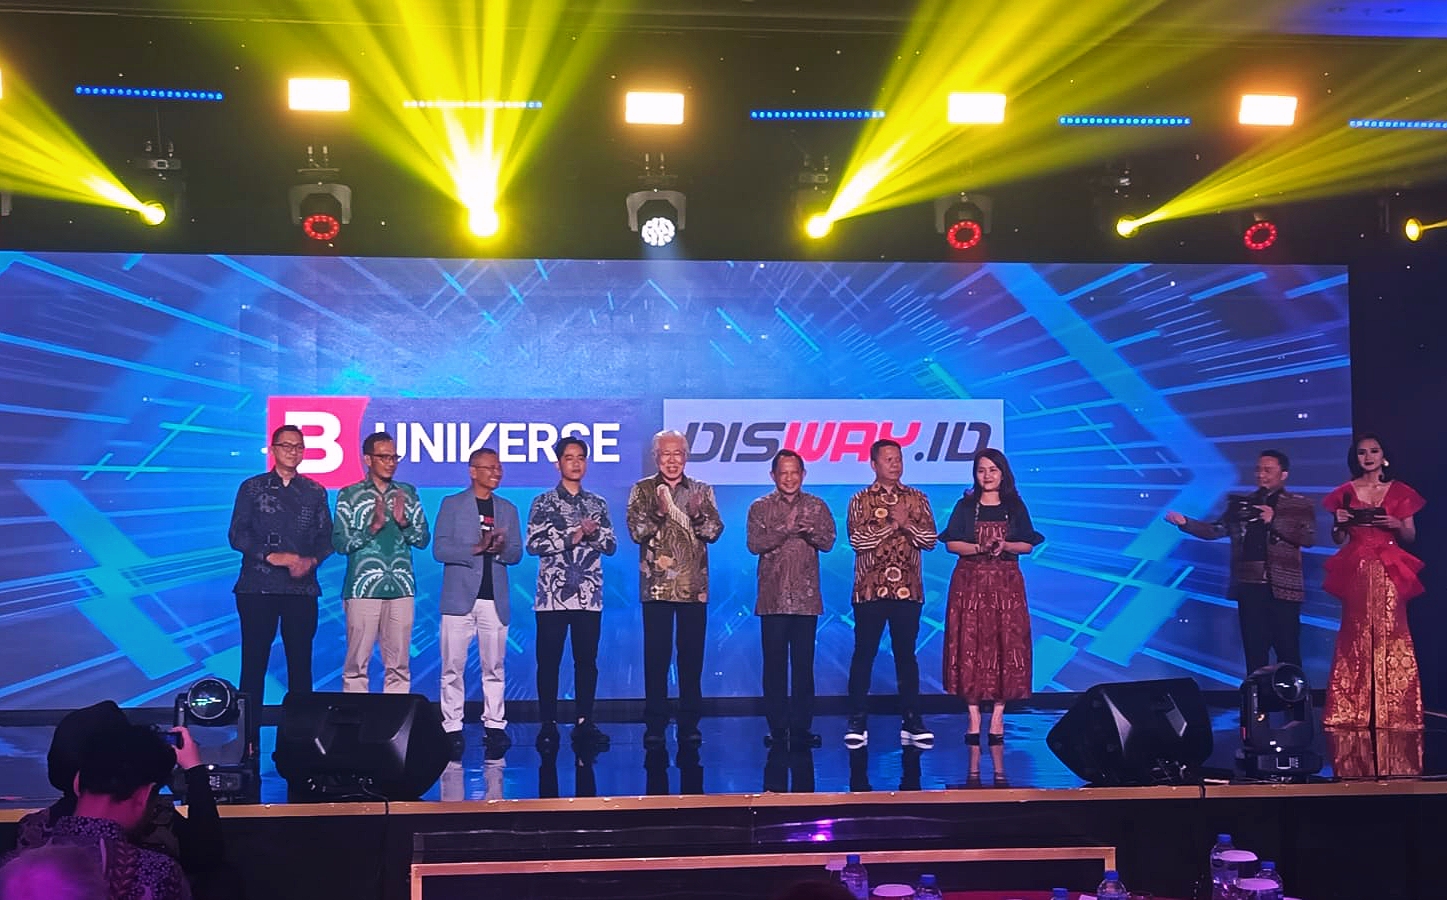 B-Universe dan Disway.id Resmi Jalin Kerja Sama, Targetkan 400 Media Network